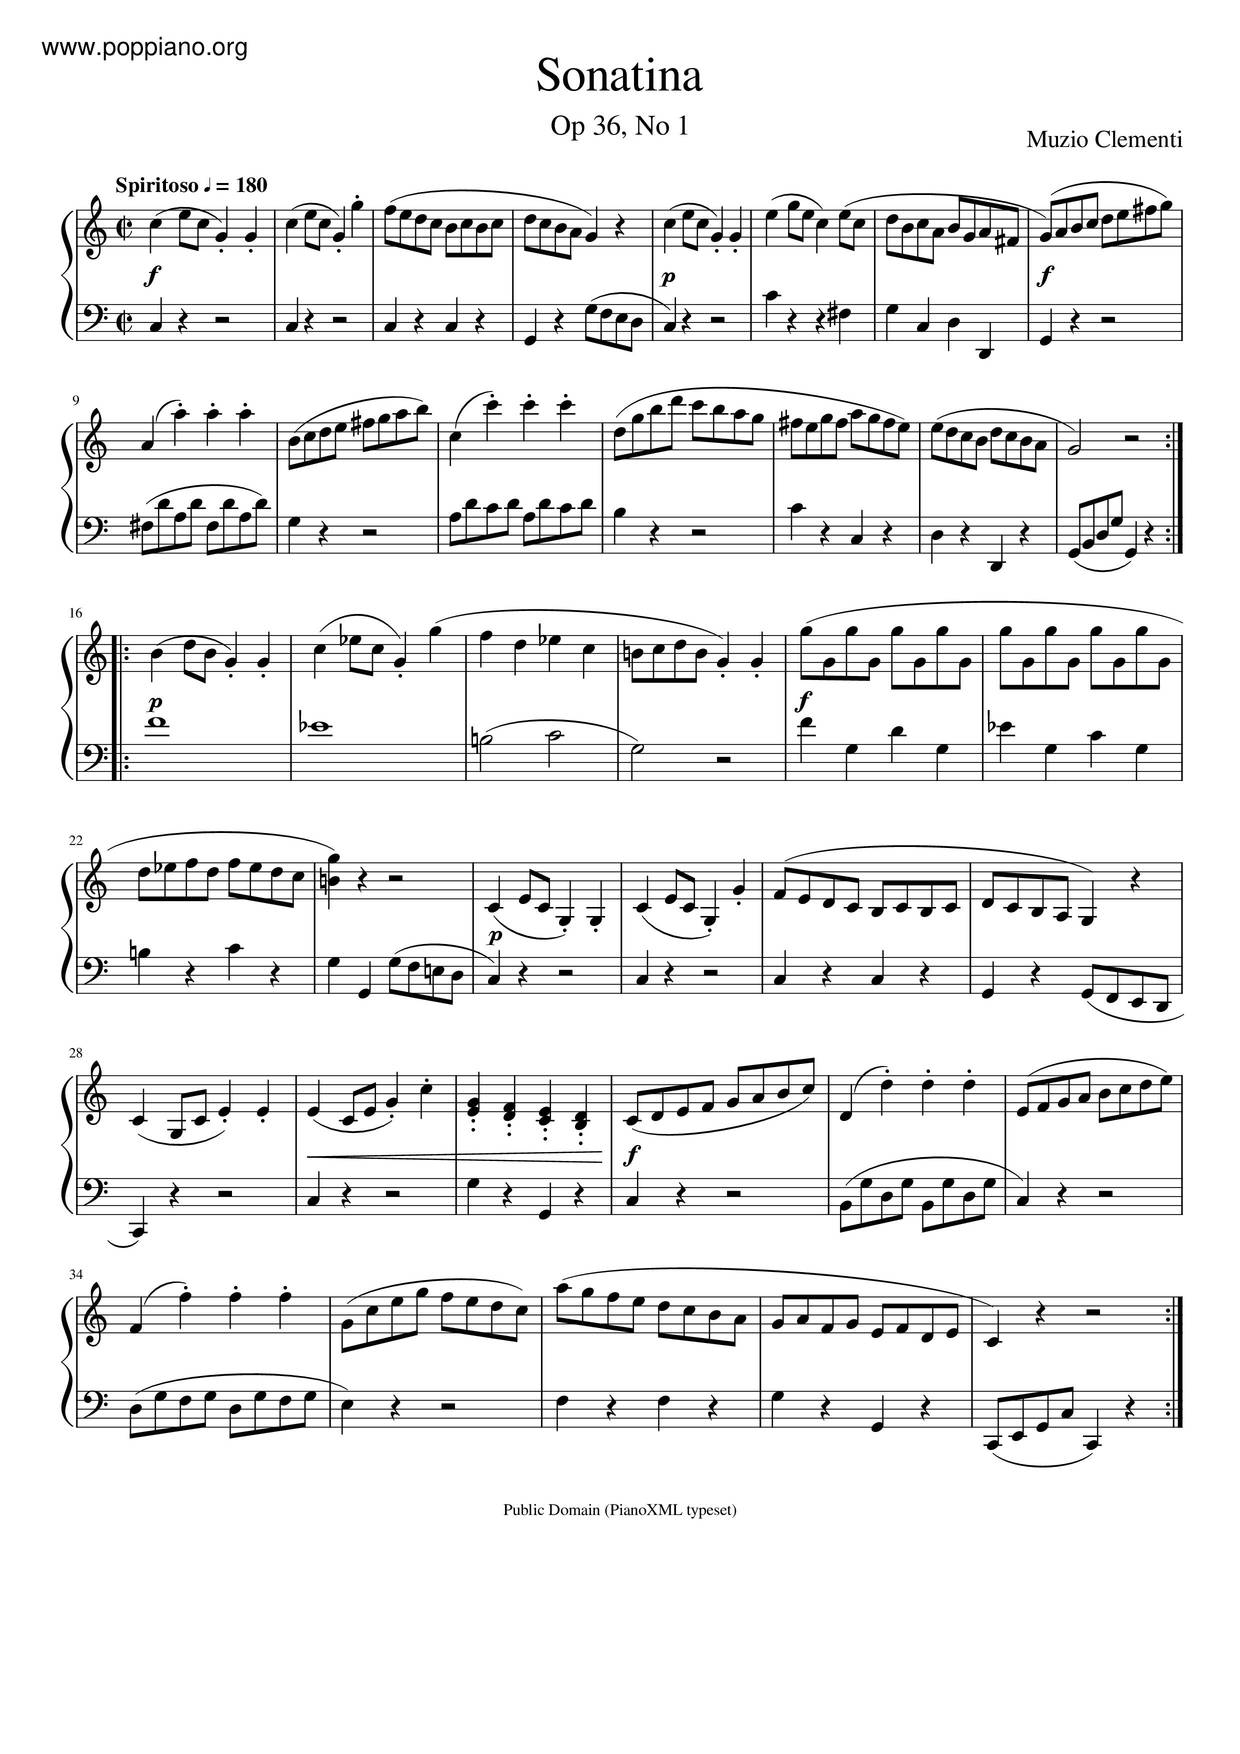 Sonatina No. 1, Op 36 Score